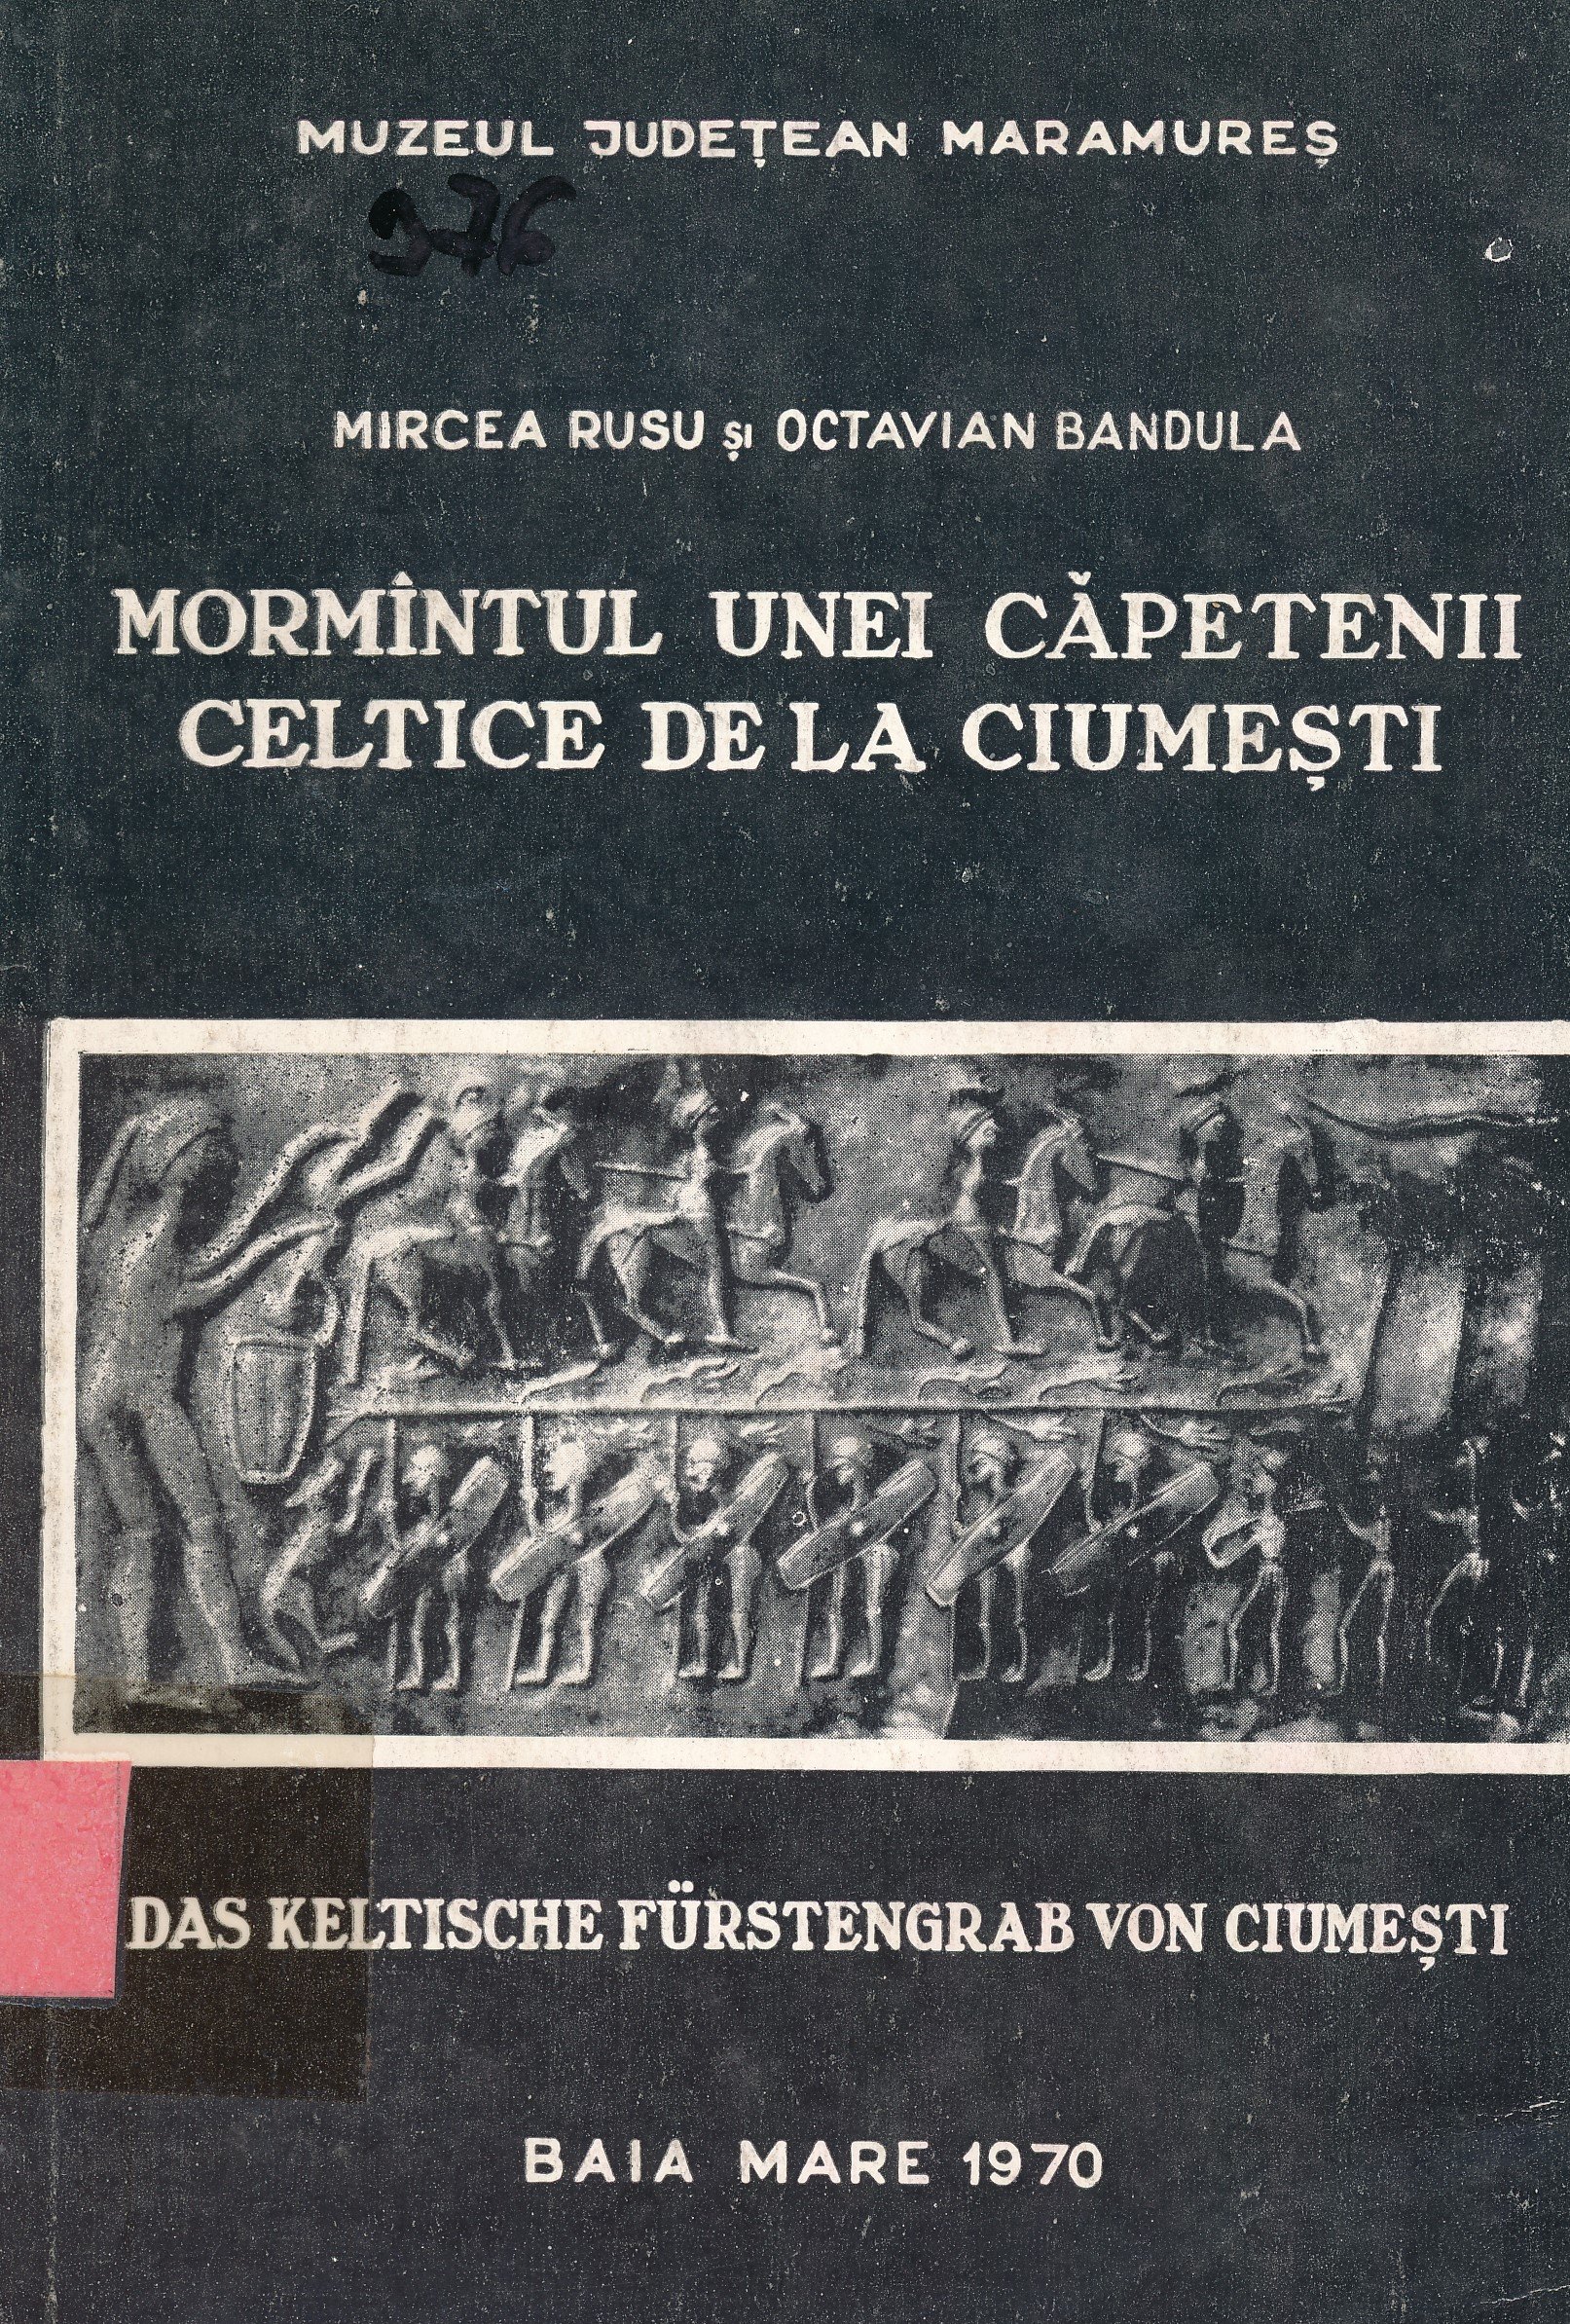 Mormînzul Unei Căpetenii Celtice De La Ciumești (Erkel Ferenc Múzeum és Könyvtár, Gyula CC BY-NC-SA)